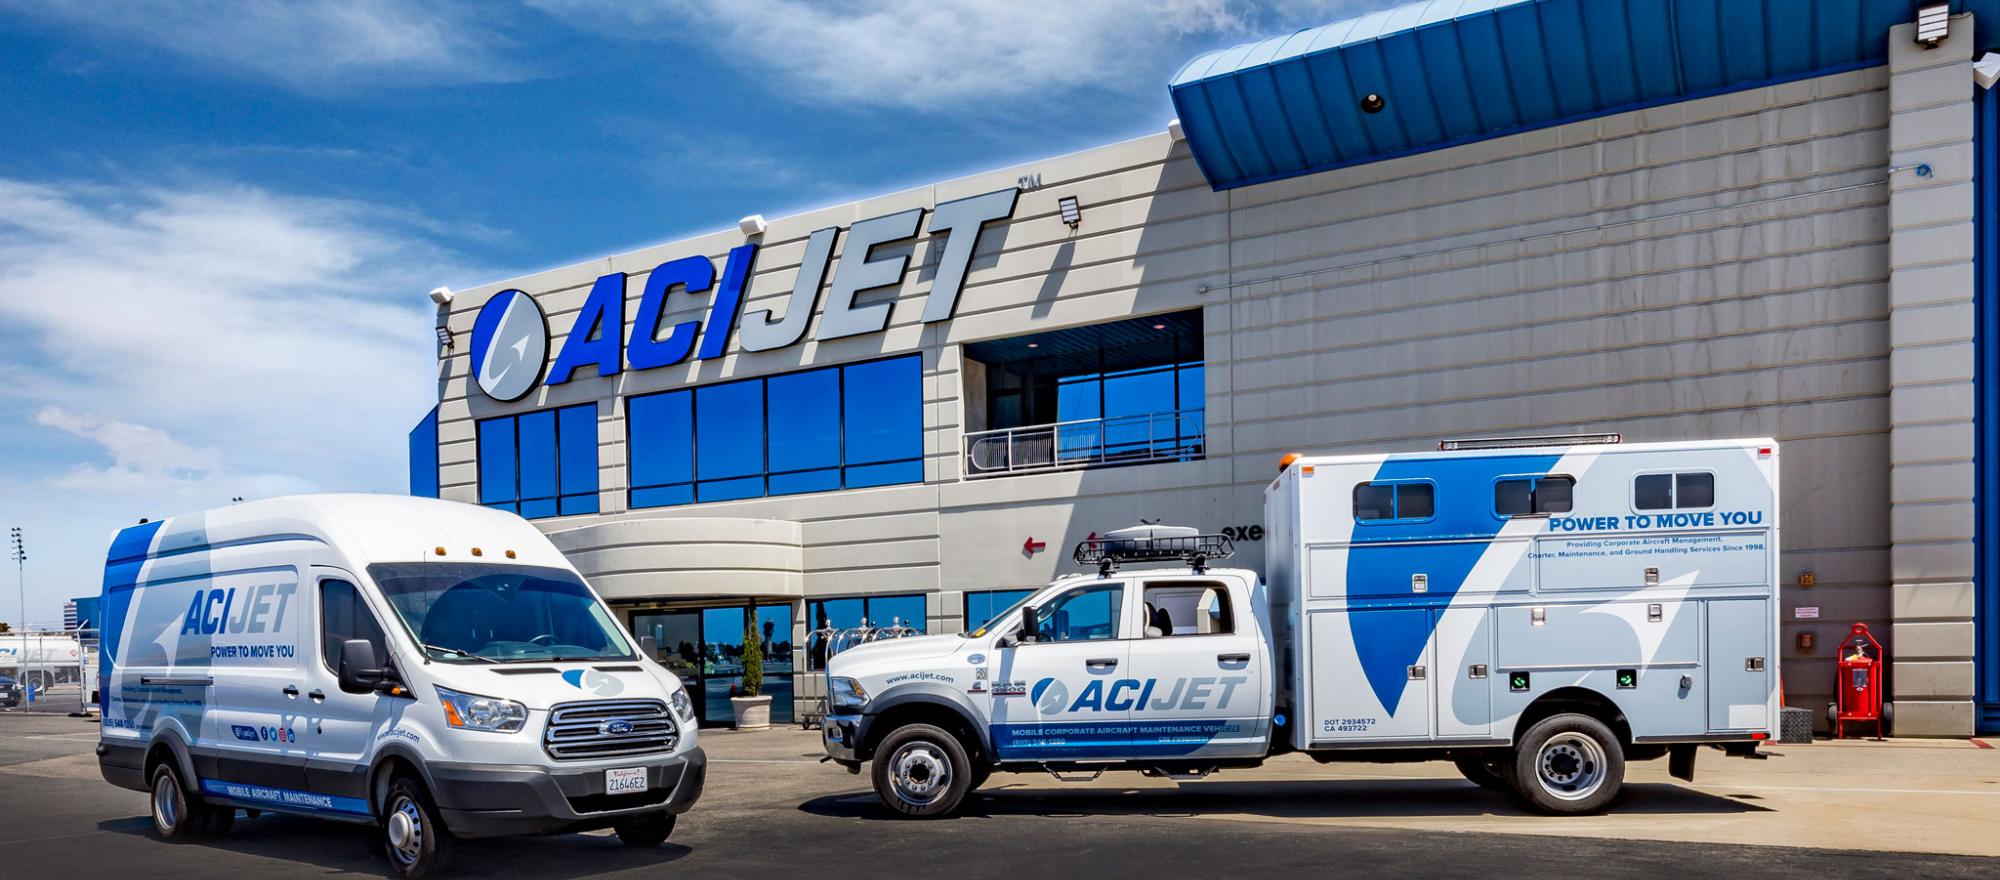 ACJ Jet mobile response trucks